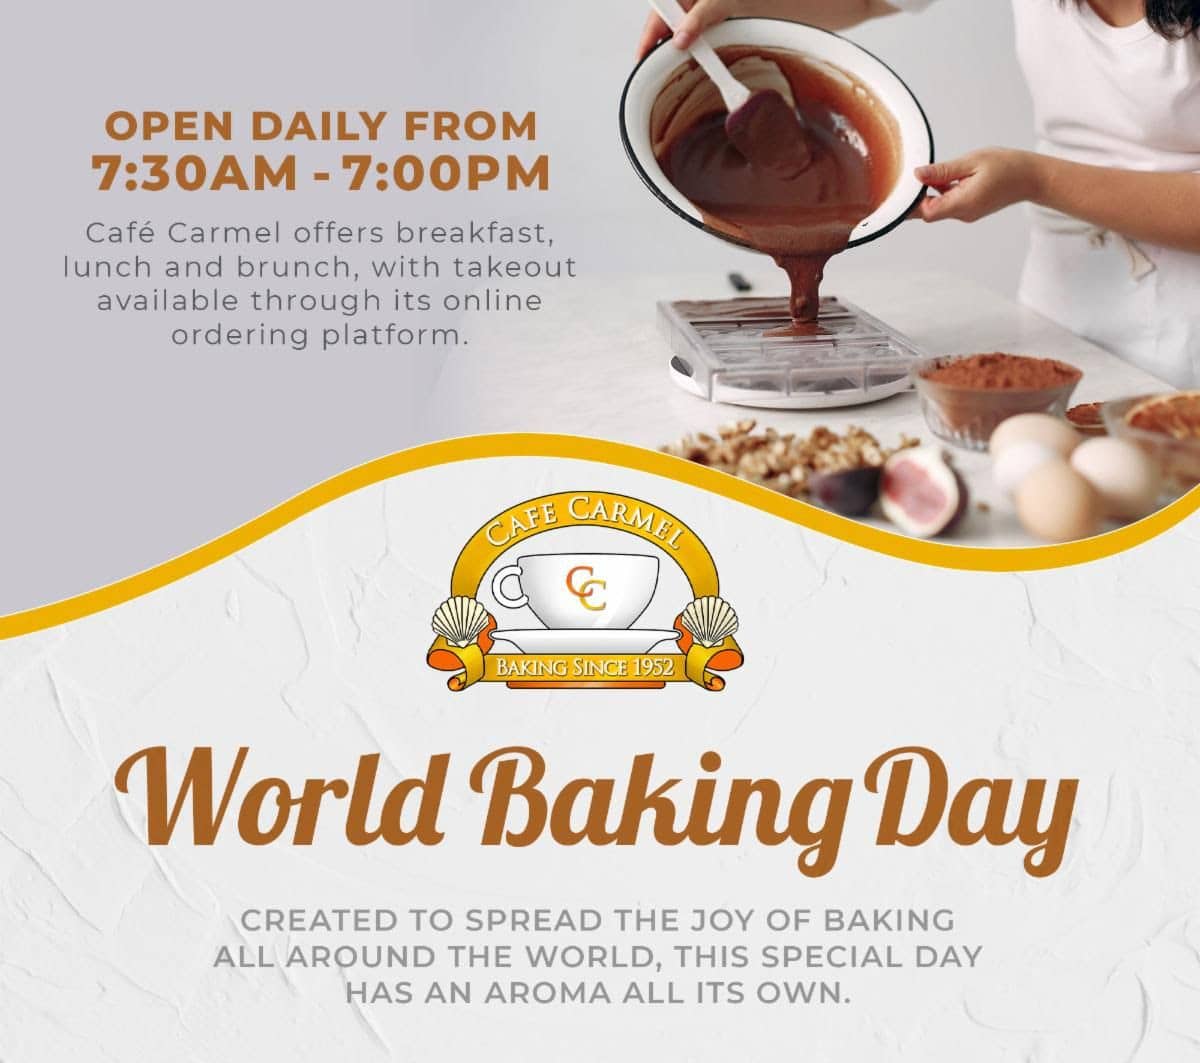 Third Sunday of May World Baking Day